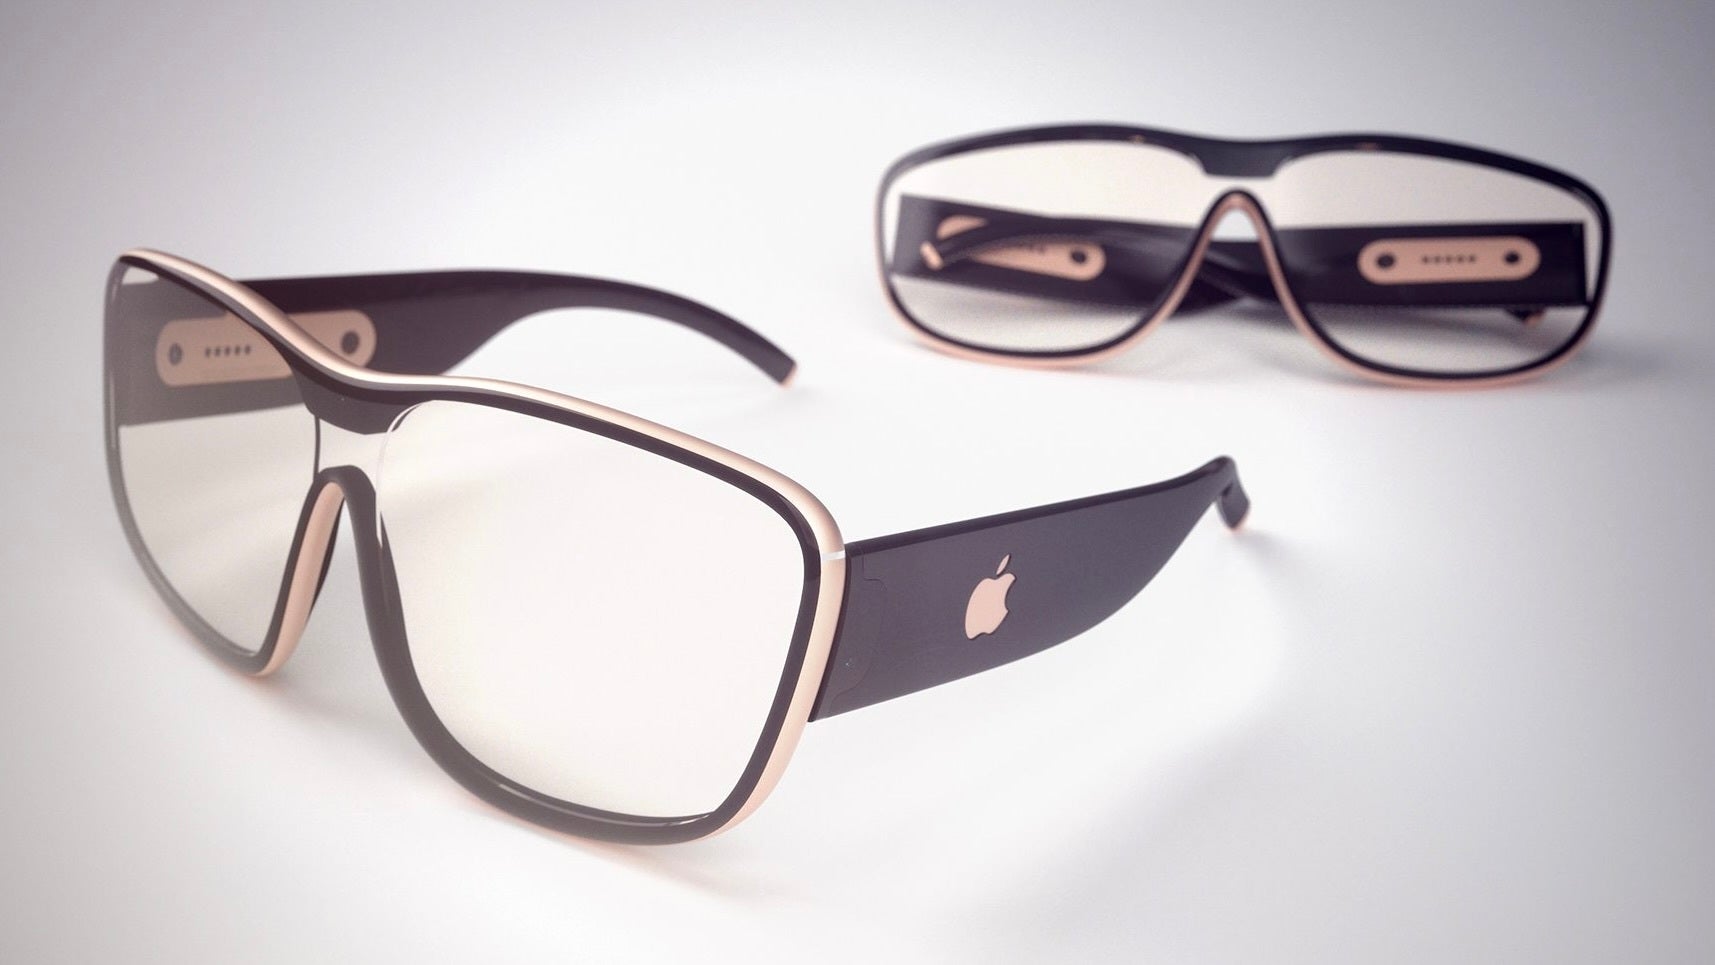 https://m-cdn.phonearena.com/images/articles/402039-image/Apple-Glass-AR-Glasses-iDrop-News-x-Martin-Hajek-14-2.jpg